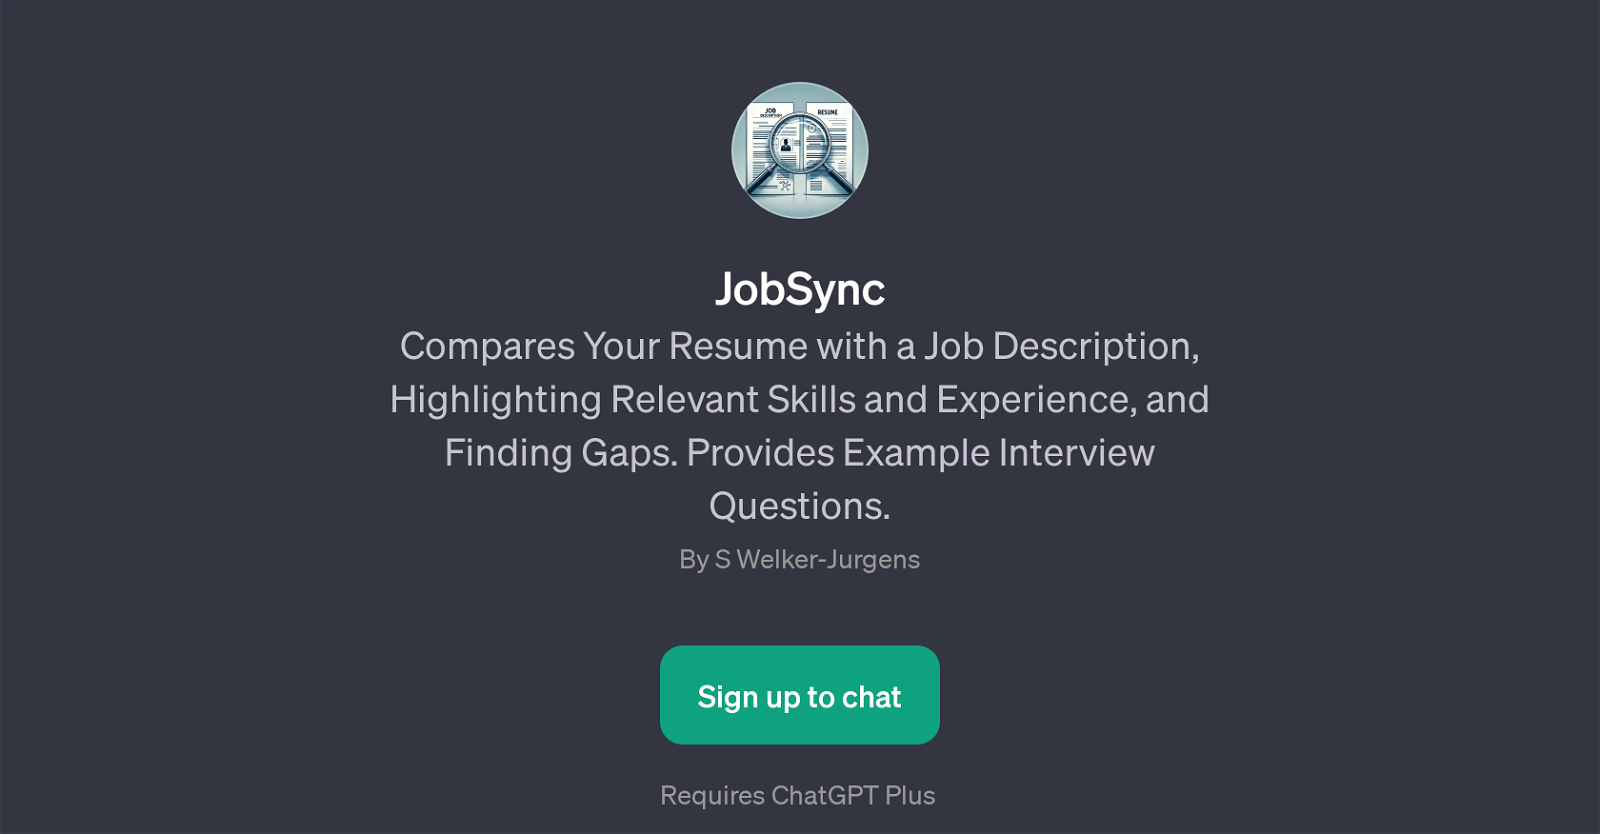 JobSync website